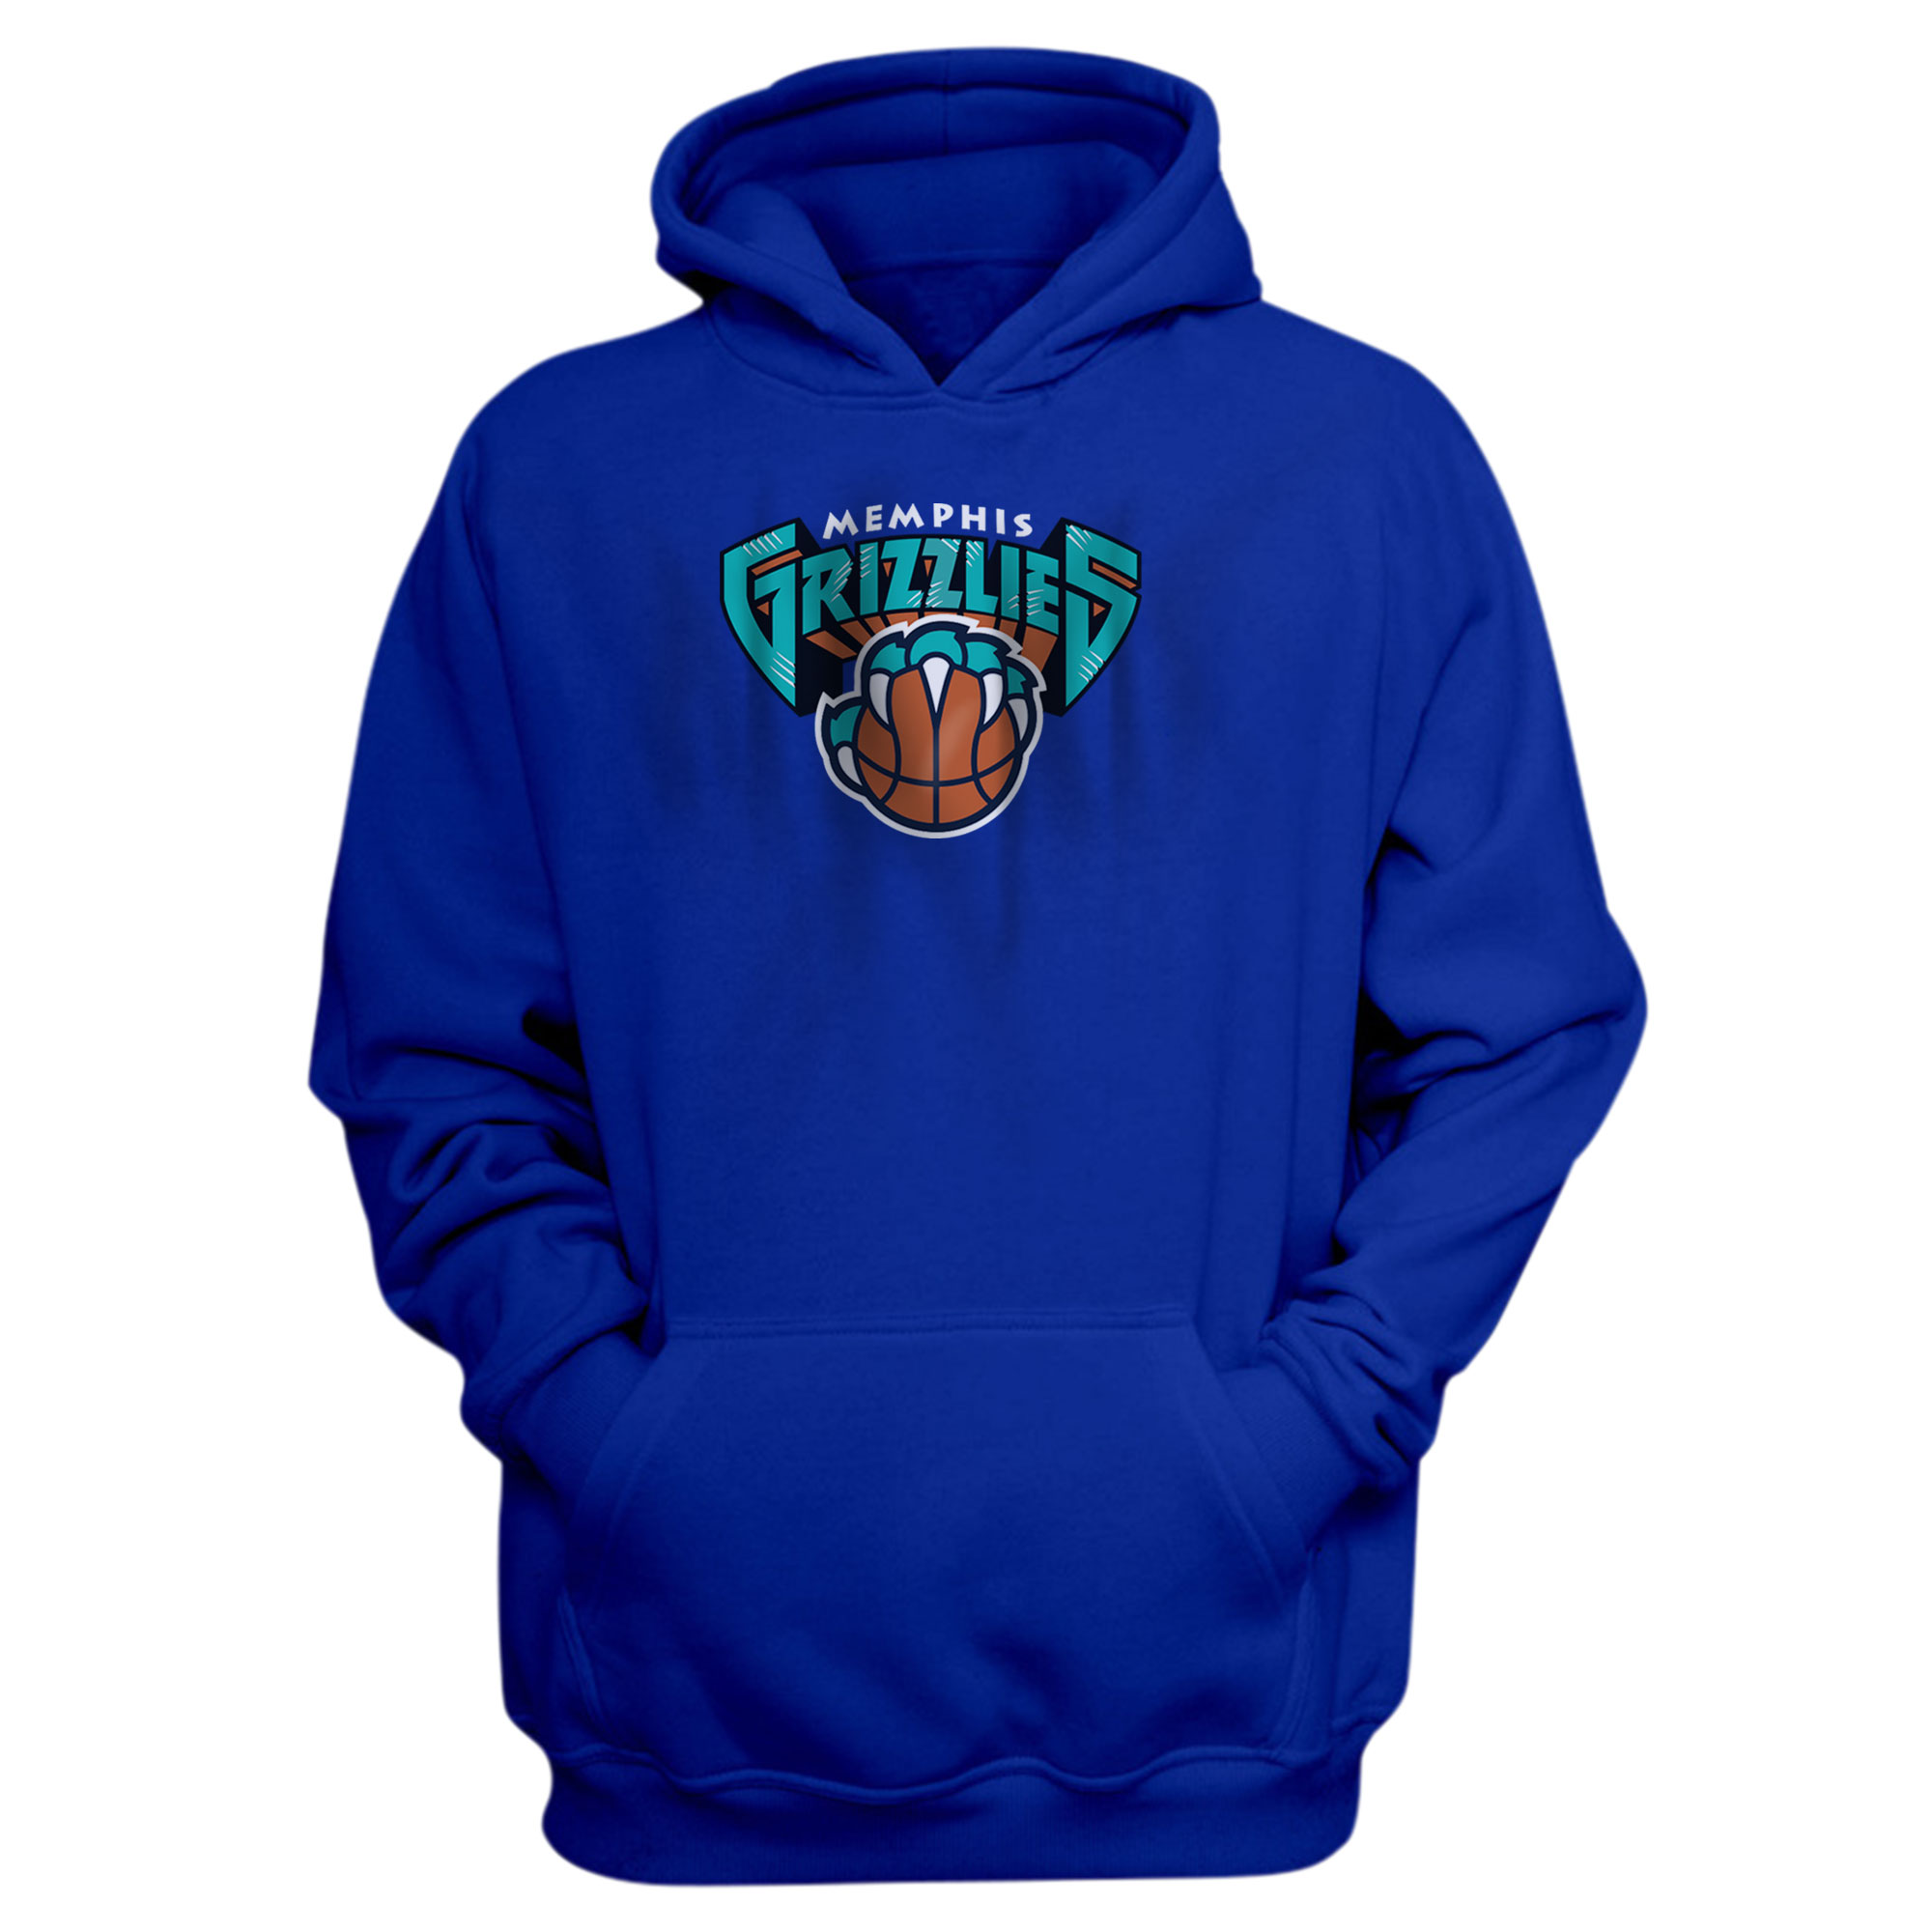 Memphis Grizzlies Hoodie (HD-BLU-493-NBA-MEMPHIS-GRZ)